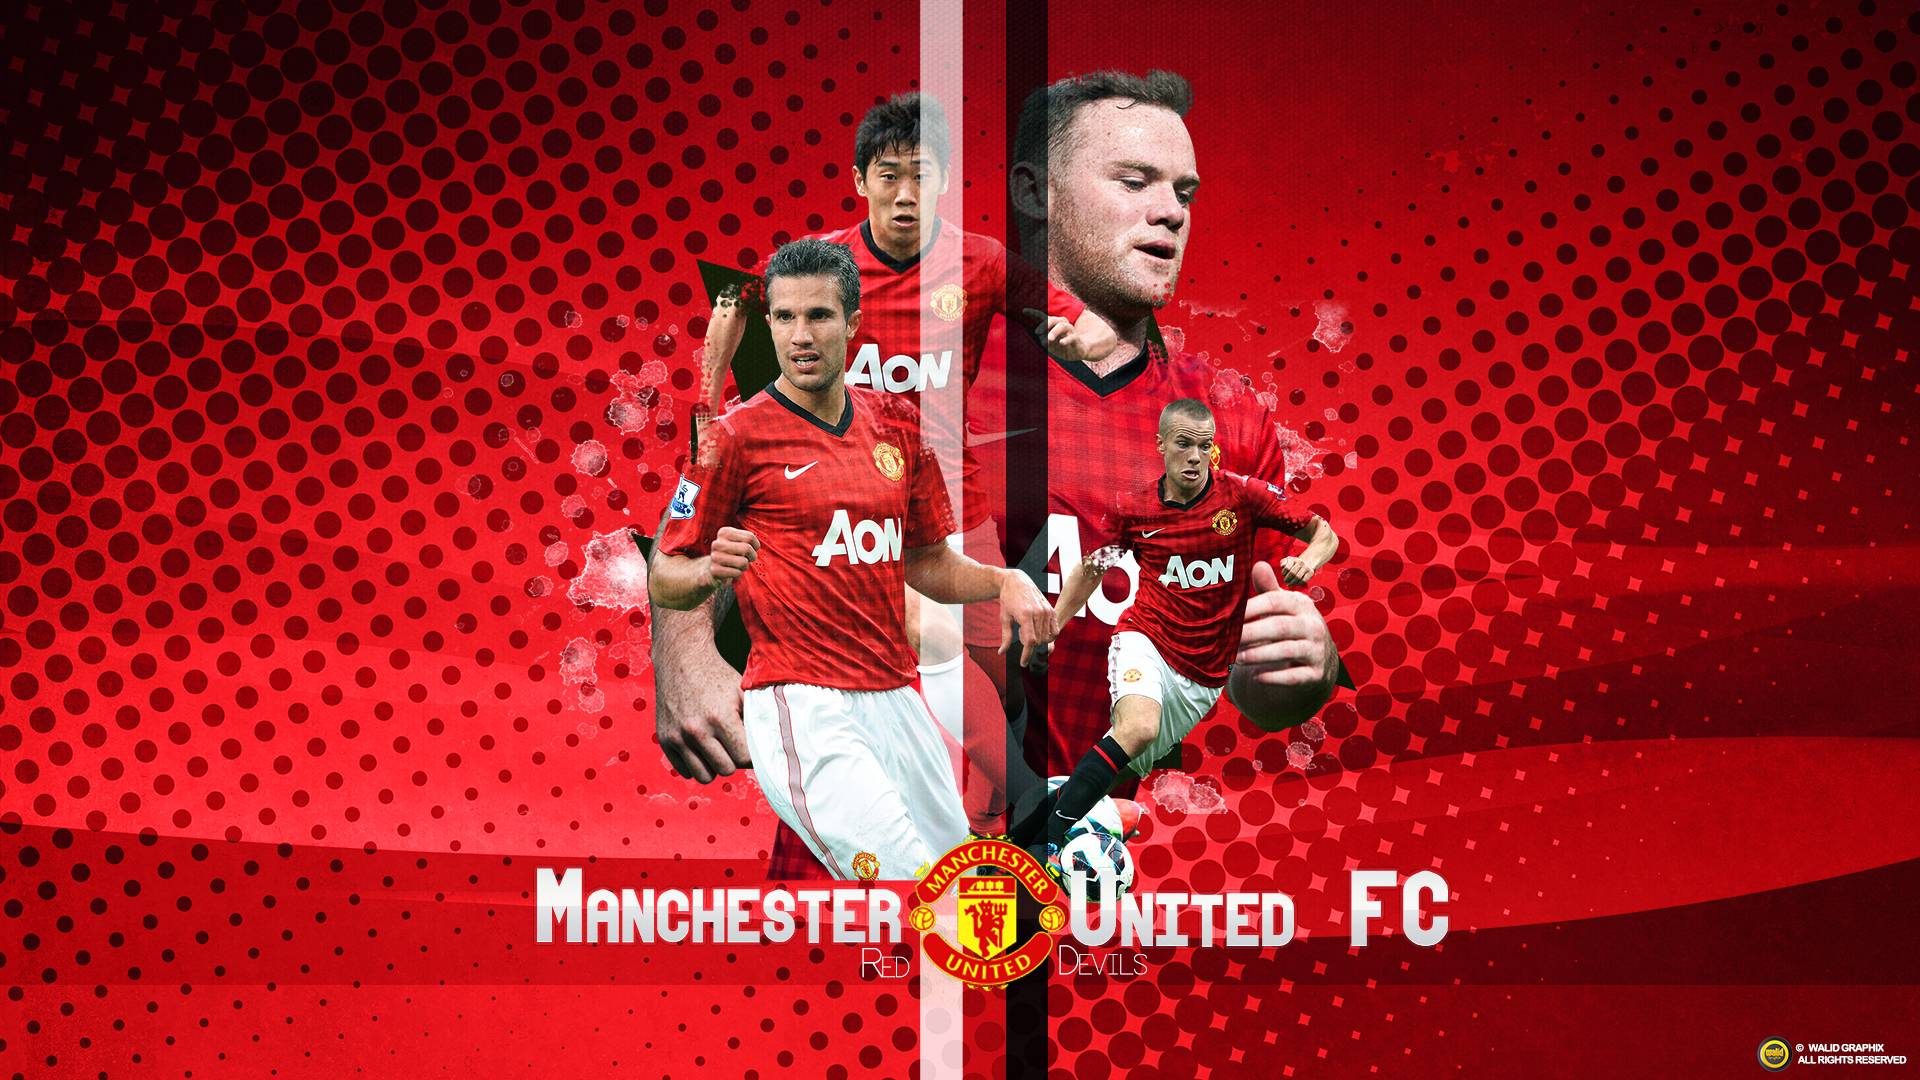 Manchester united wallpaper HD for desk